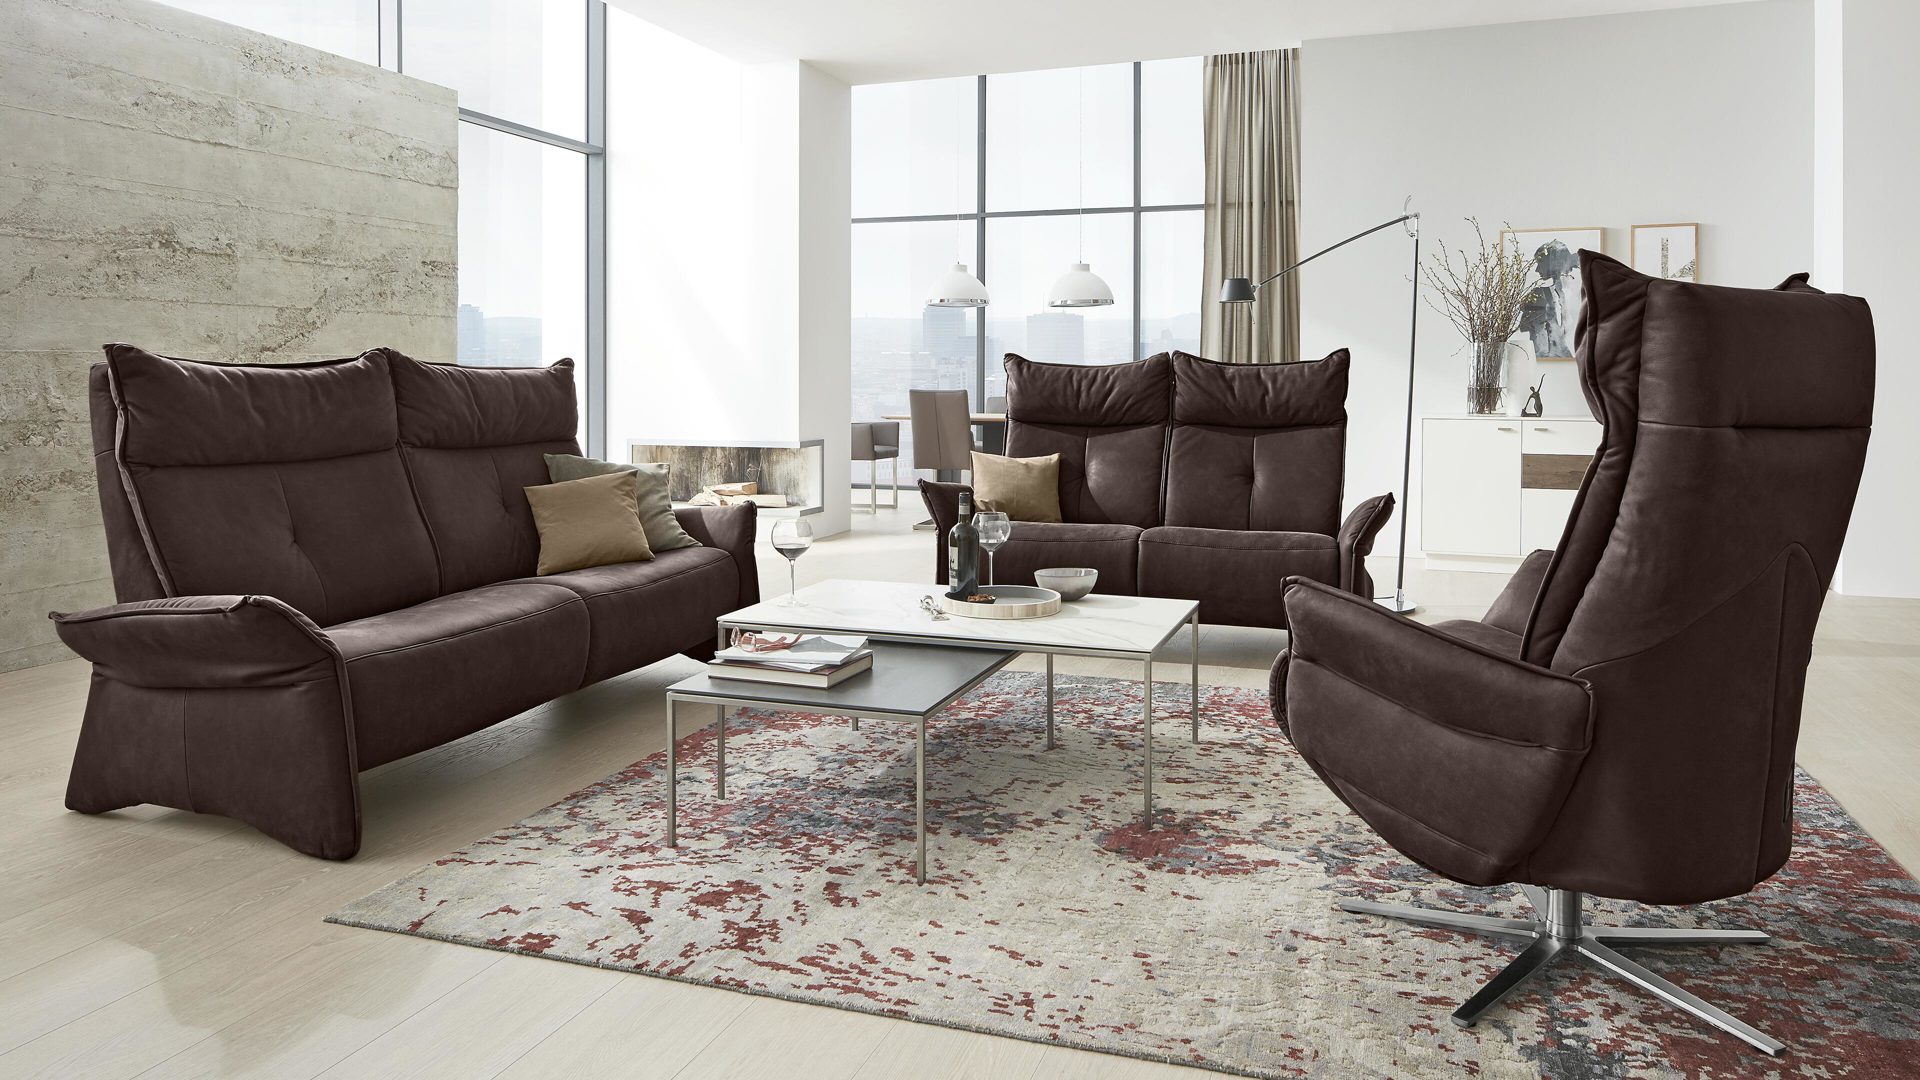 Interliving Sofa Serie 4200 2 Sitzer